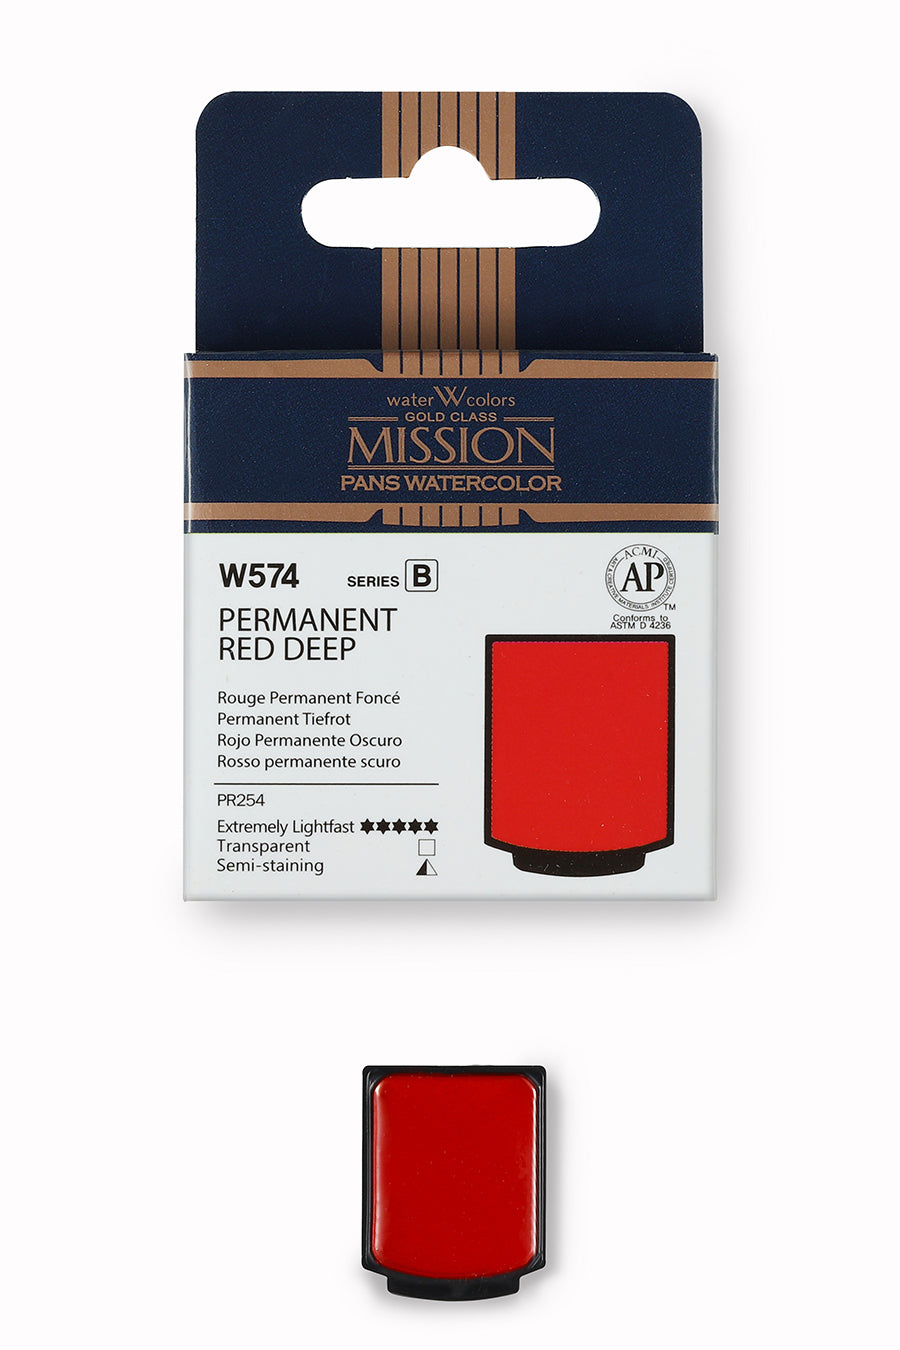 Mijello® Mission #Gold Class #Permanent Red Deep